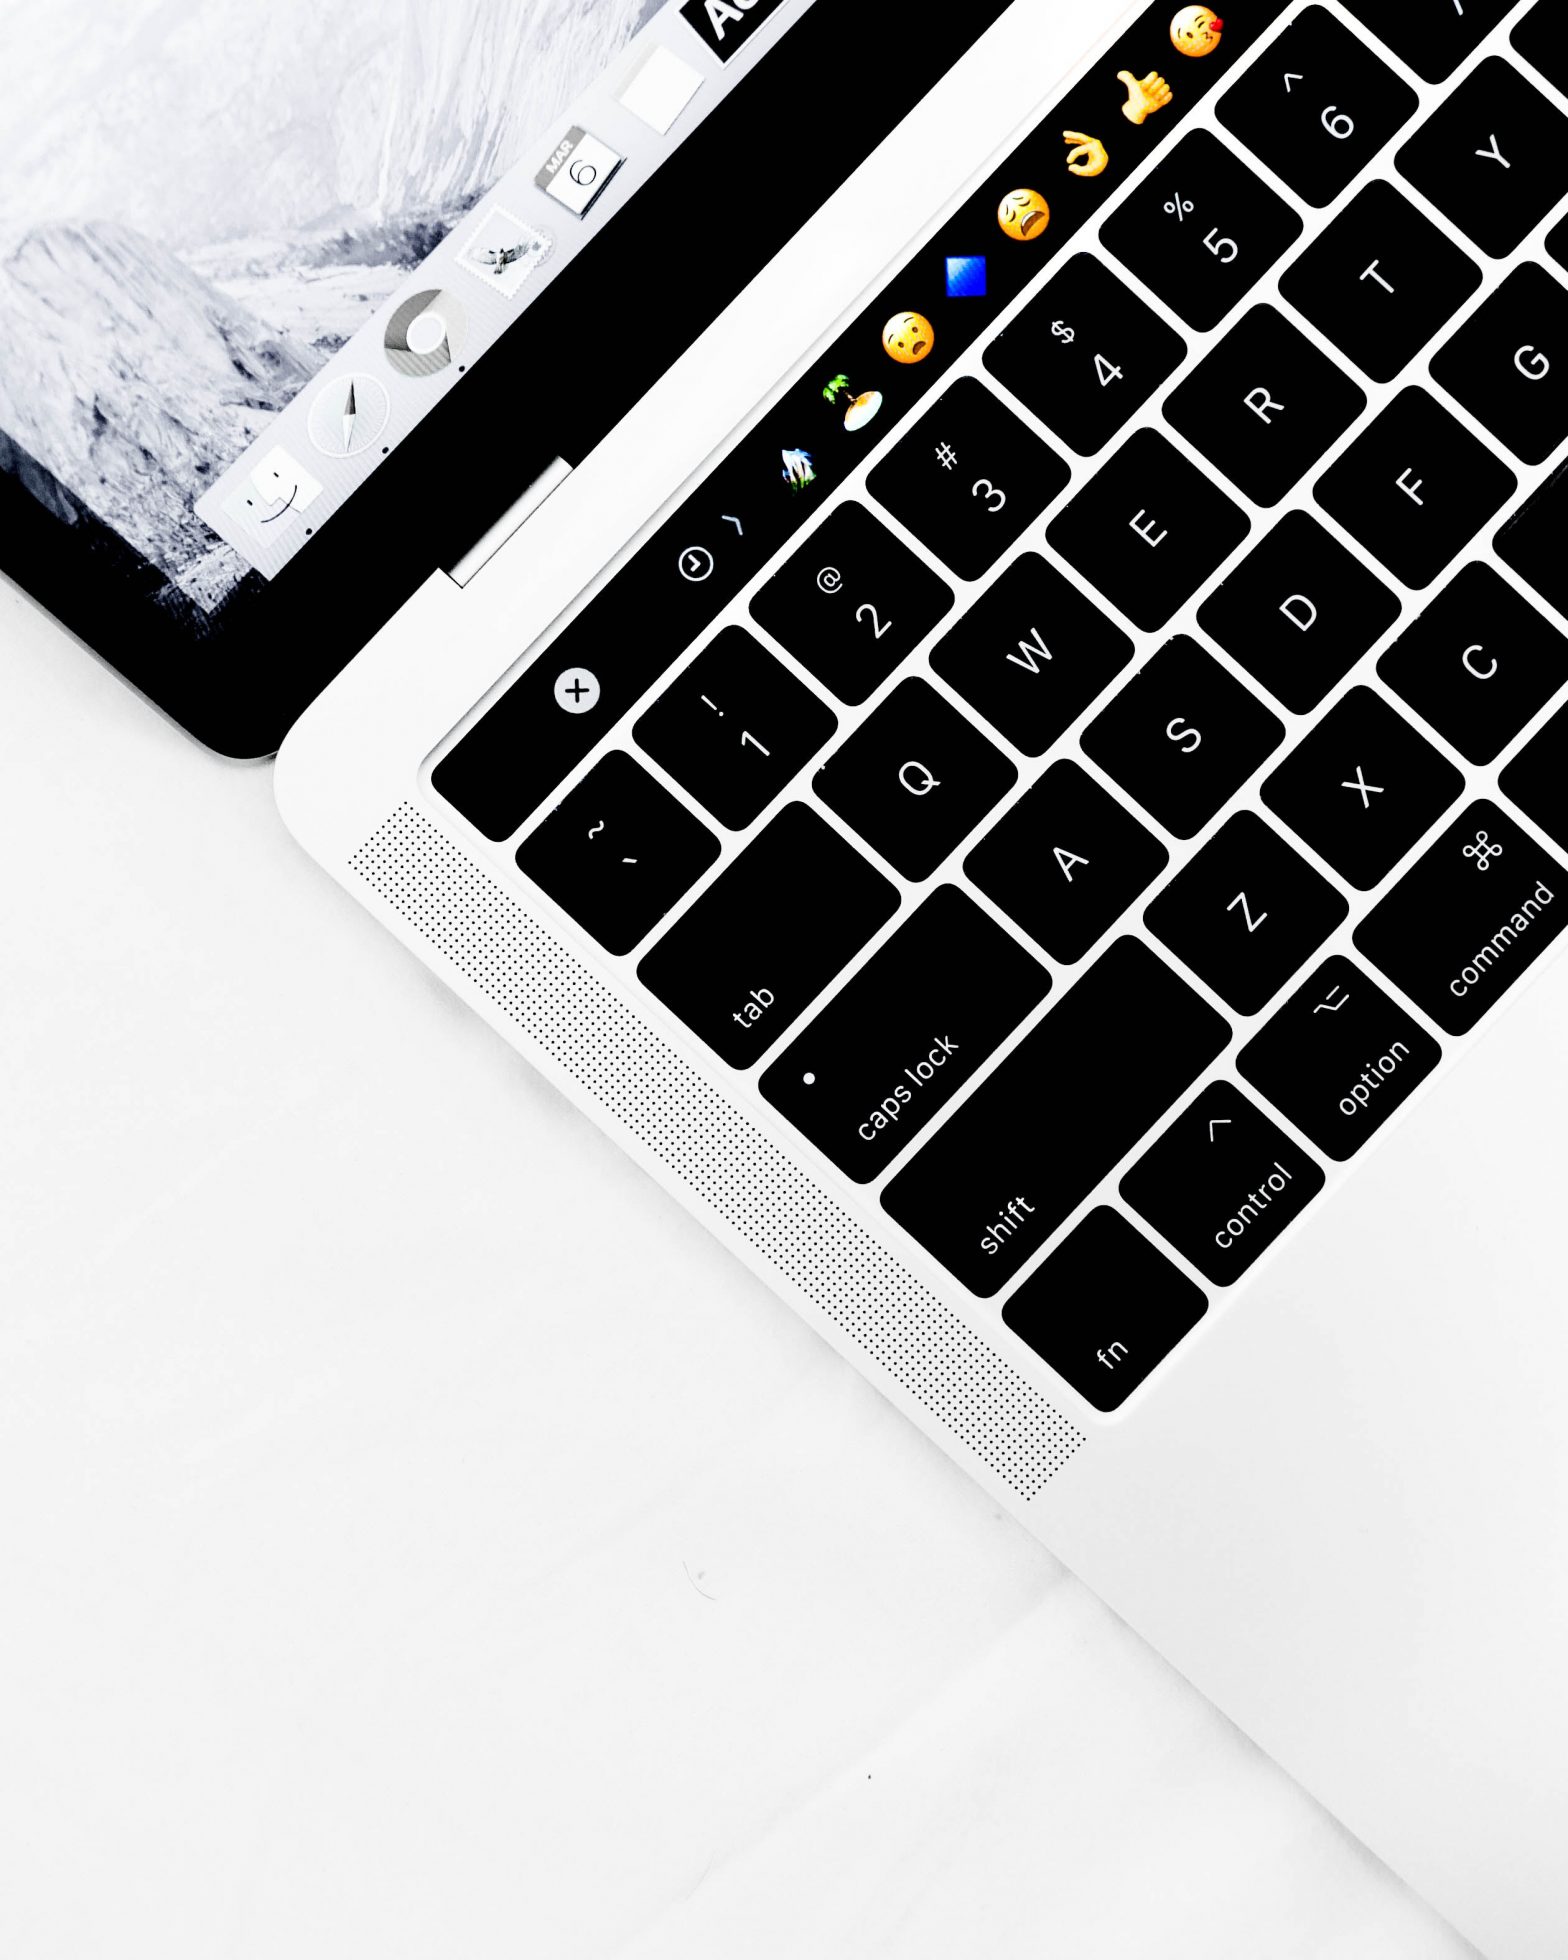 Mac Keyboard and Emojis